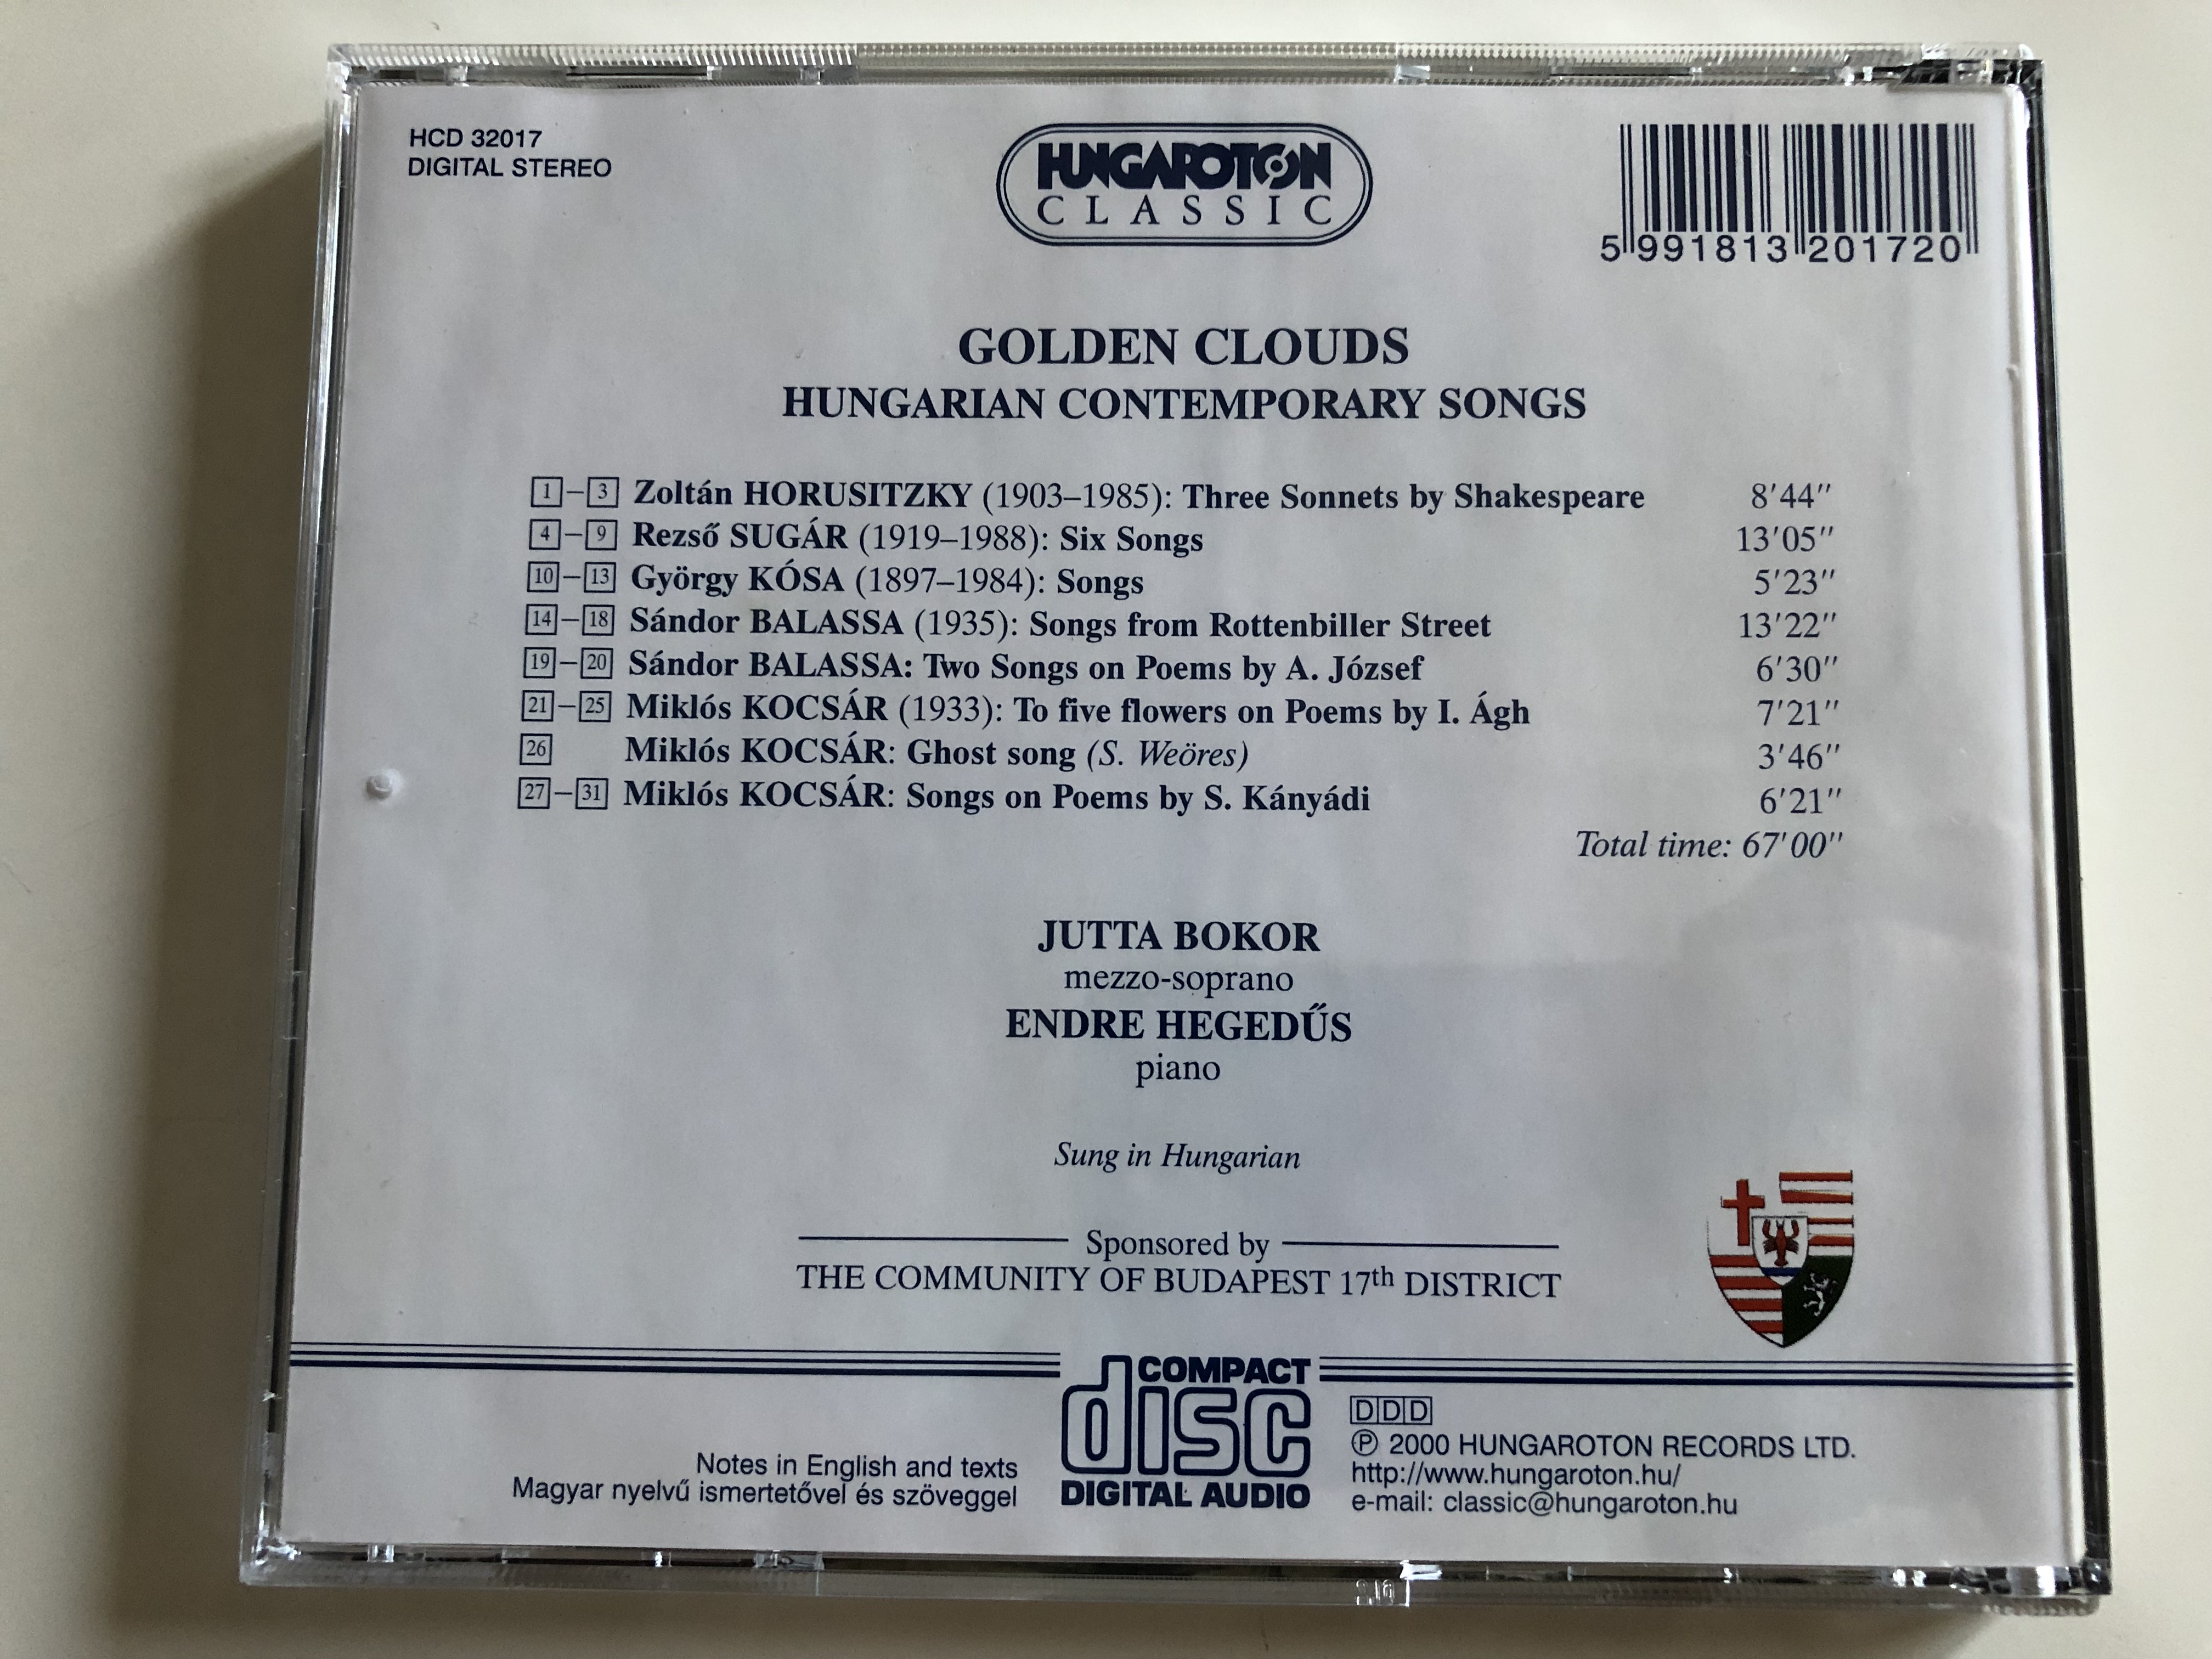 golden-clouds-hungarian-contemporary-songs-horusitzky-r.-sug-r-k-sa-balassa-kocs-r-jutta-bokor-mezzo-soprano-endre-heged-s-piano-hungaroton-classic-audio-cd-2000-hcd-32017-13-.jpg